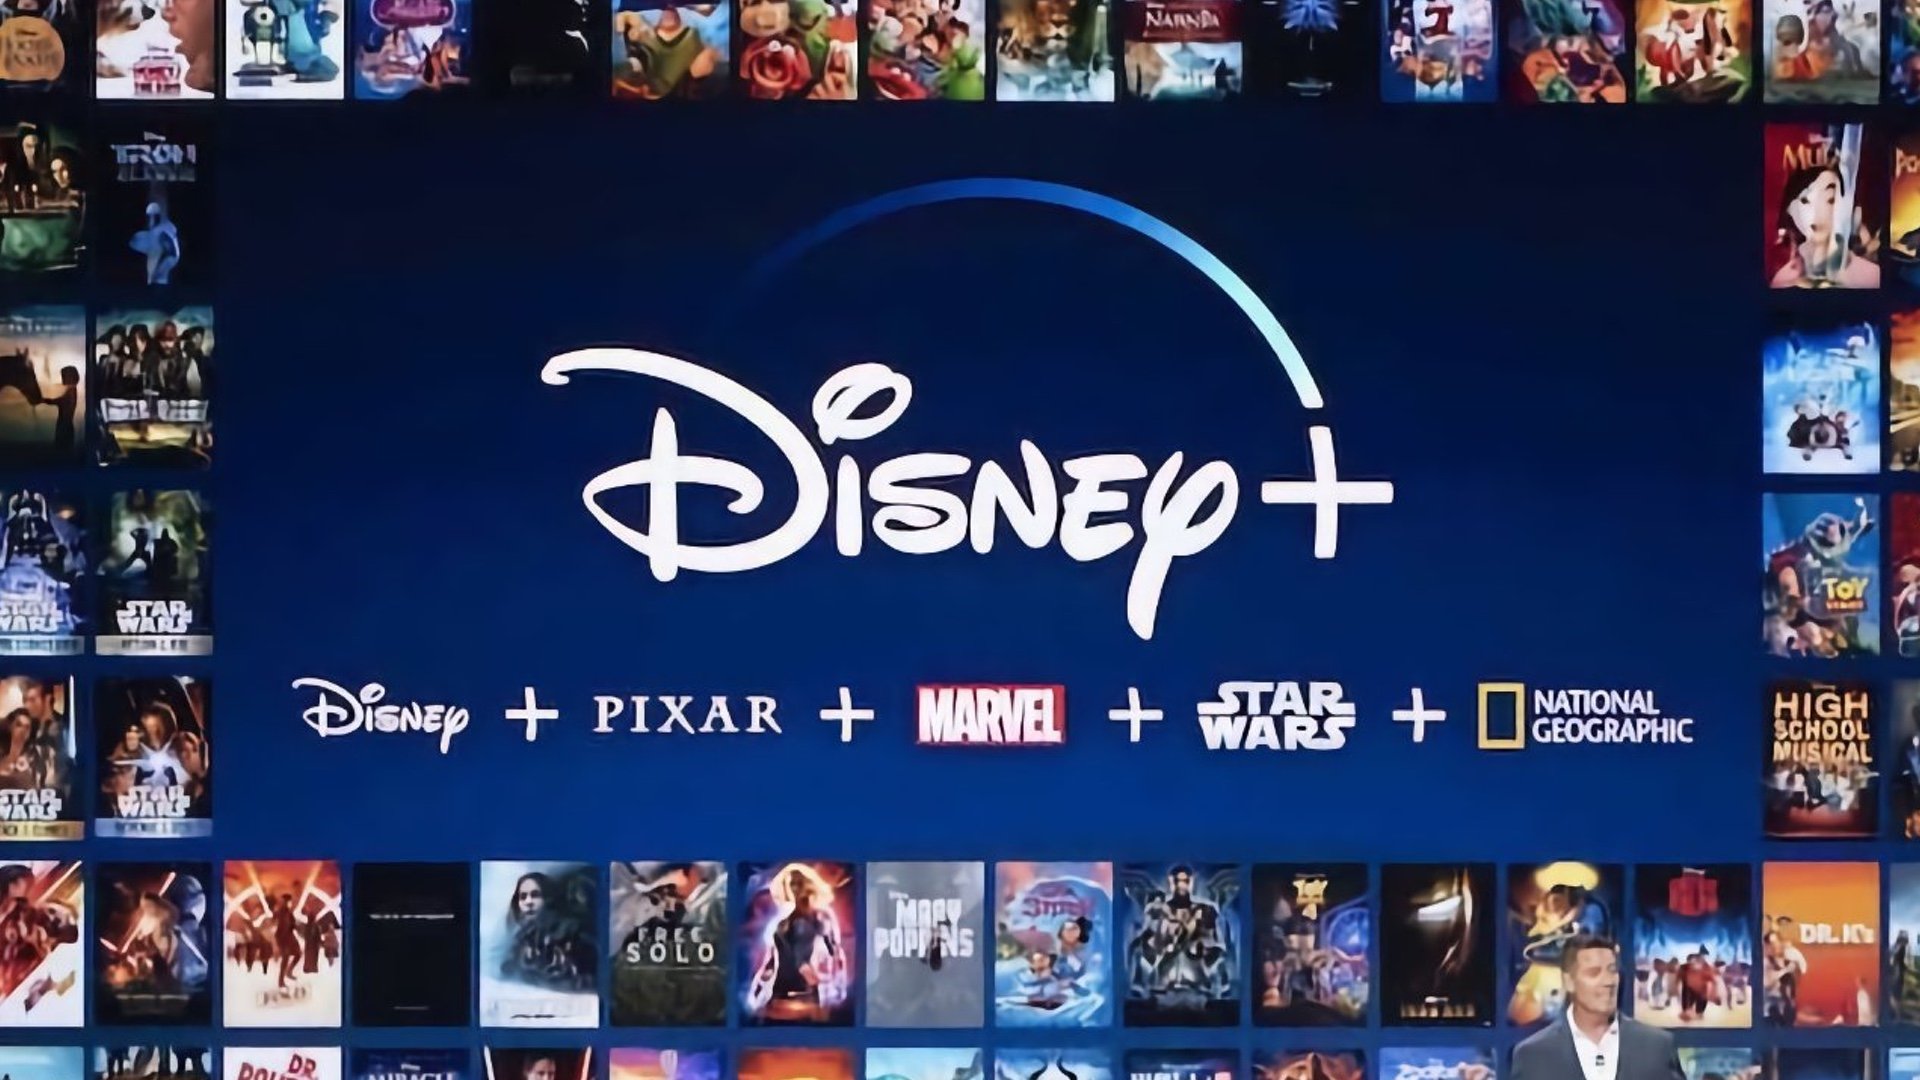 Toy Story' – Pixar begins on Disney+ – Stream On Demand